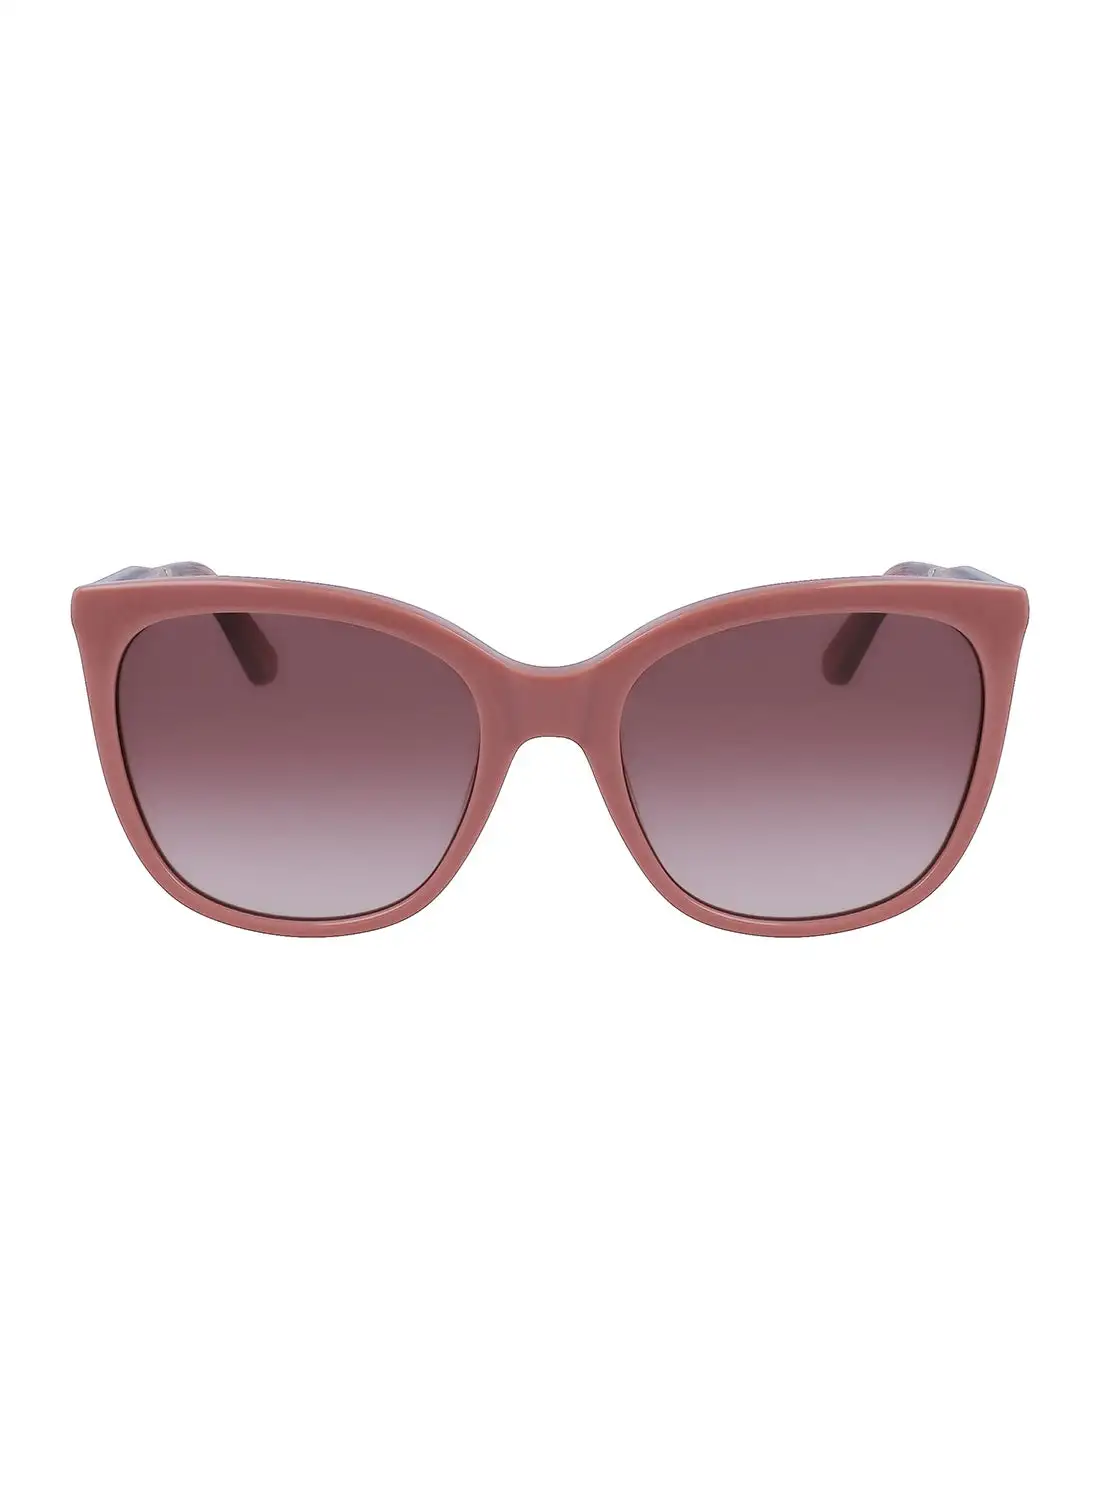 CALVIN KLEIN Women's Rectangular Sunglasses - CK23500S-601-5519 - Lens Size: 55 Mm